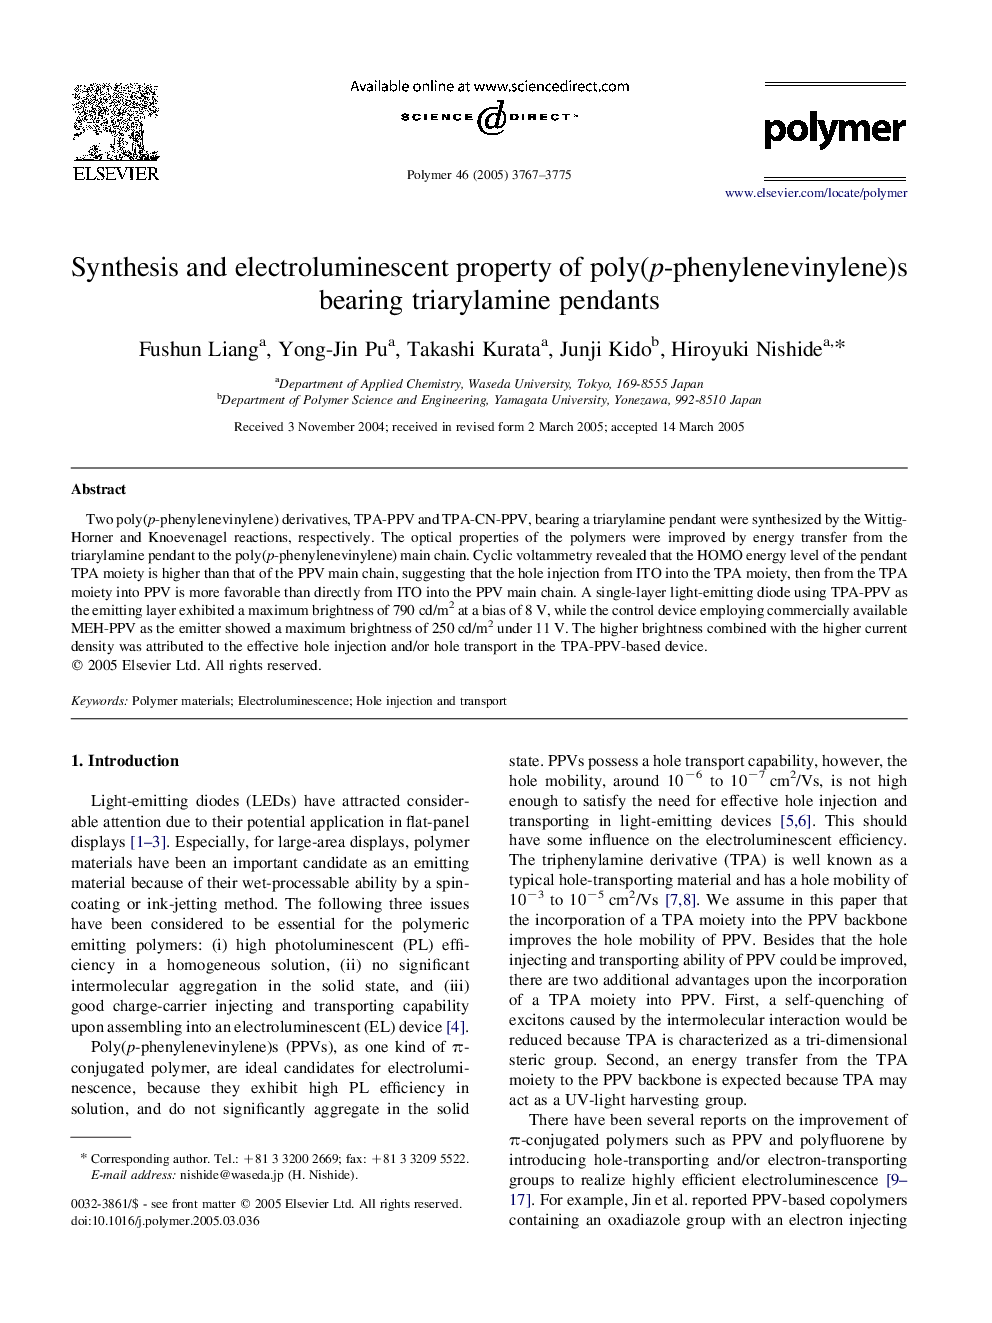 Synthesis and electroluminescent property of poly(p-phenylenevinylene)s bearing triarylamine pendants